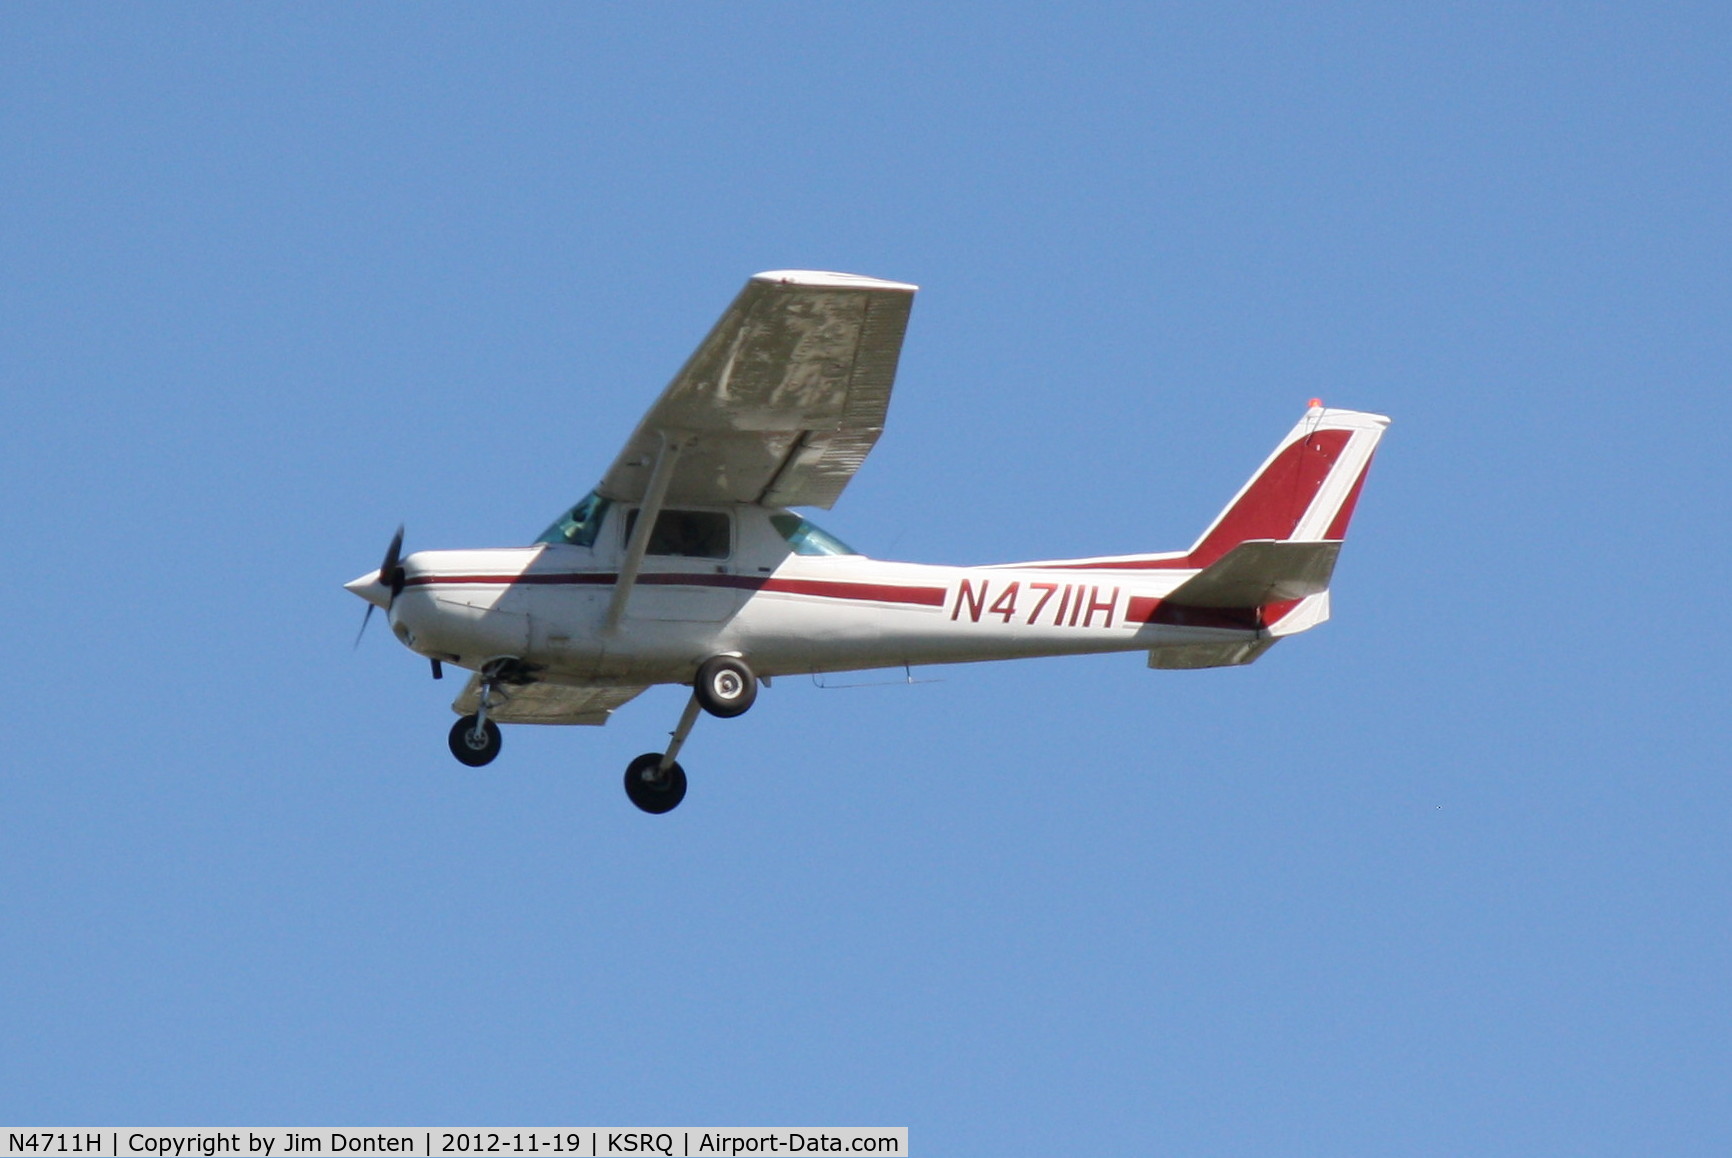 N4711H, 1980 Cessna 152 C/N 15283968, Cessna 152 (N4711H) on approach to Sarasota-Bradenton International Airport